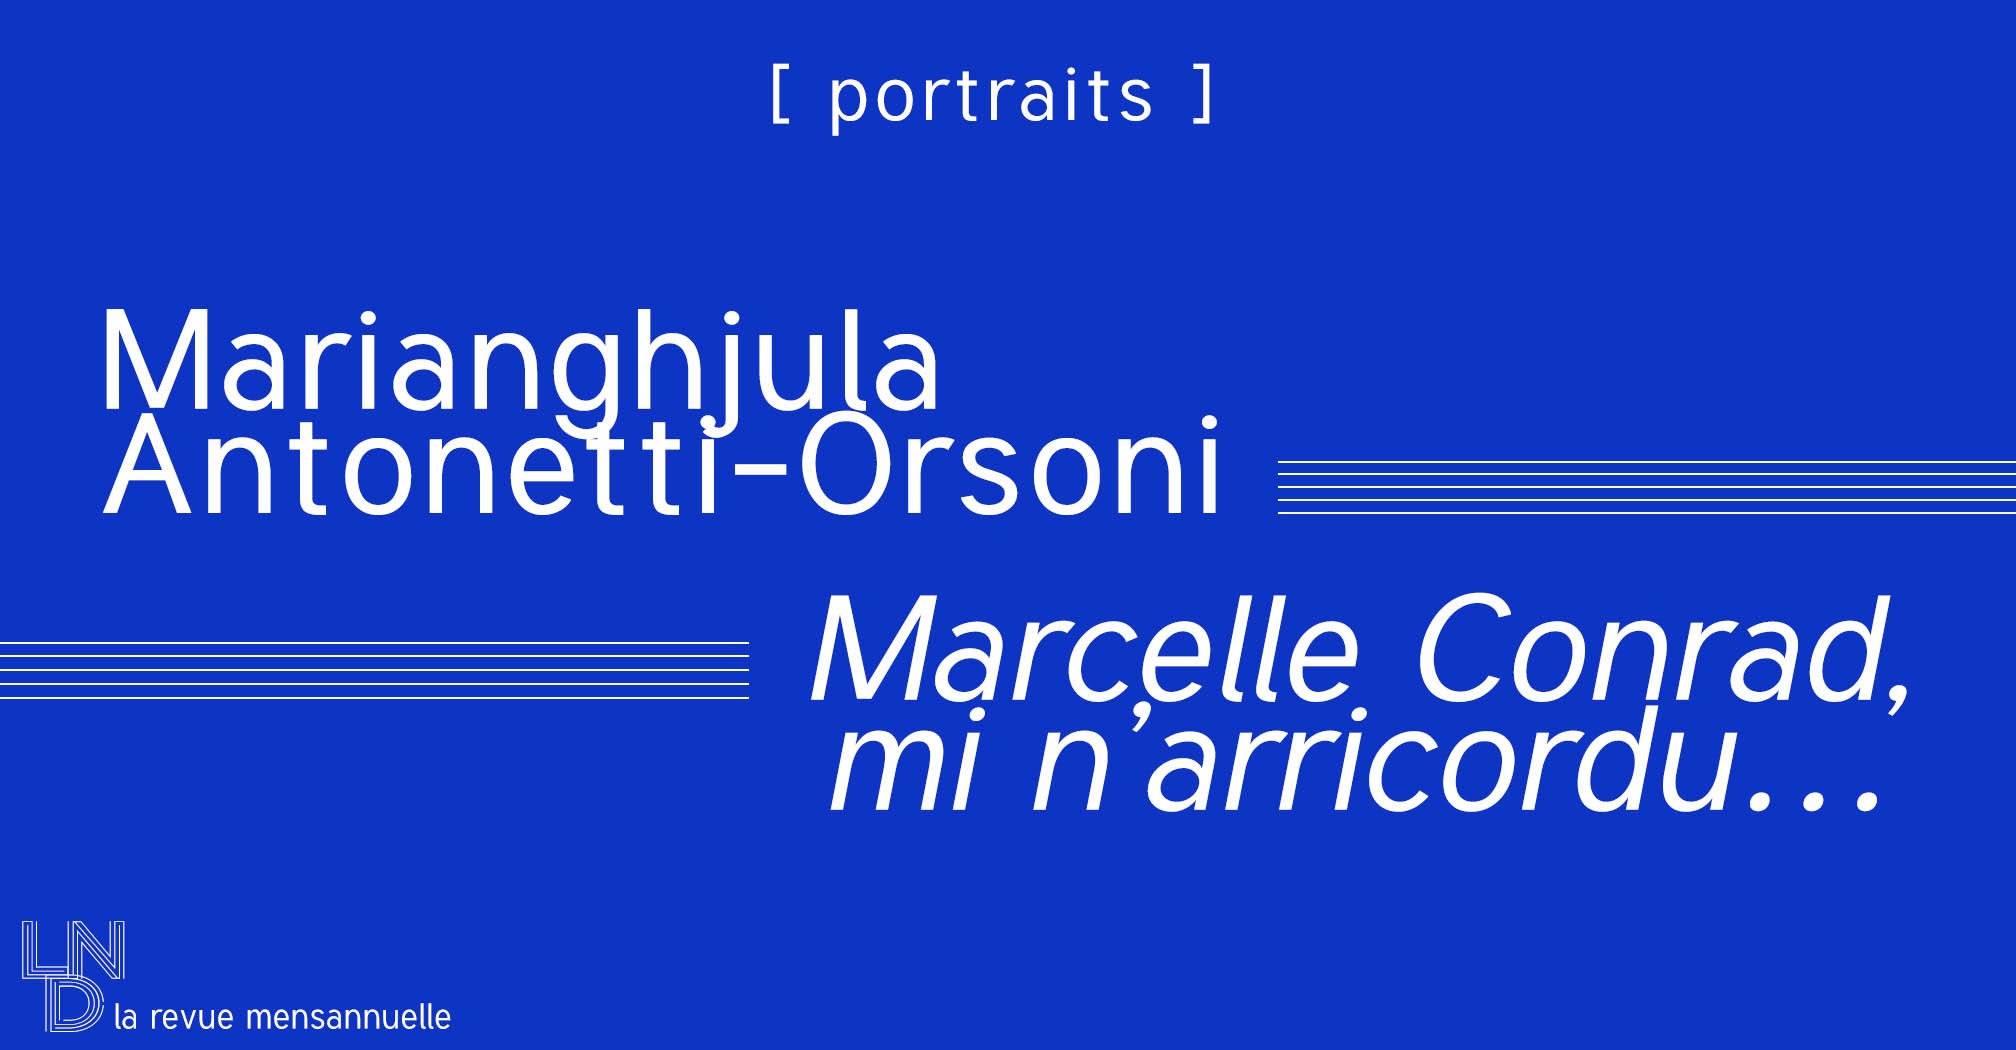 [Portraits] Marcelle Conrad, mi n’arricordu… - Marianghjula Antonetti-Orsoni